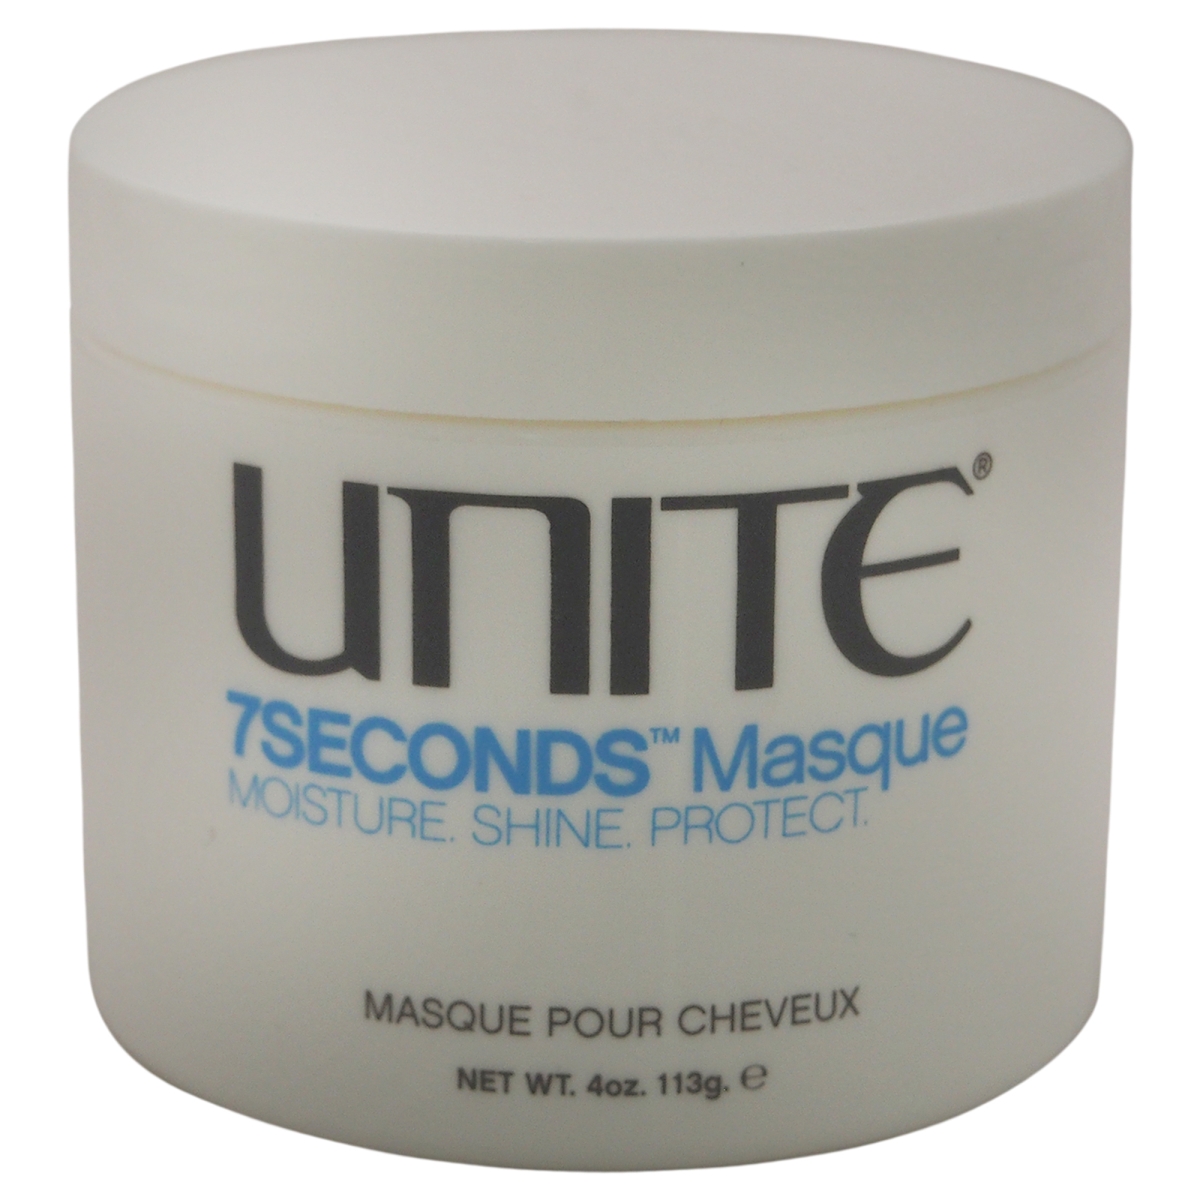 U-hc-11029 4 Oz 7 Seconds Masque For Unisex